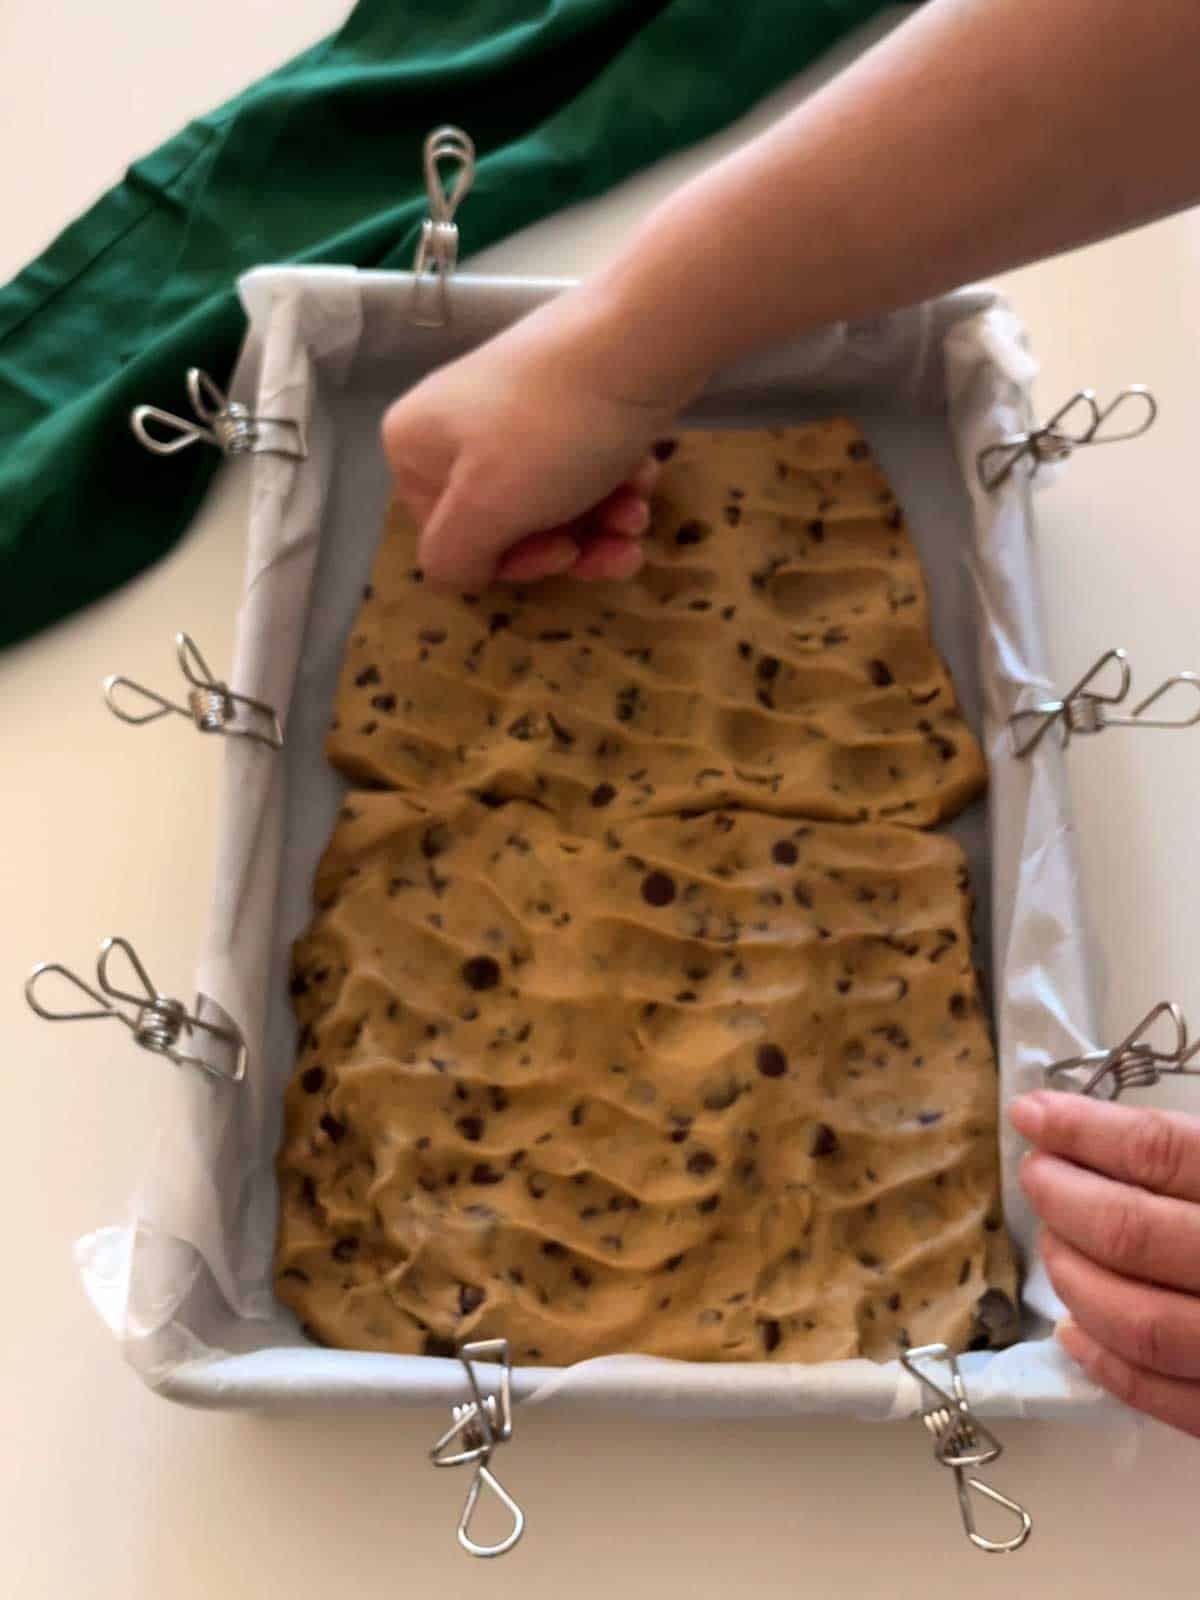 Pressing cookies into prepared pan